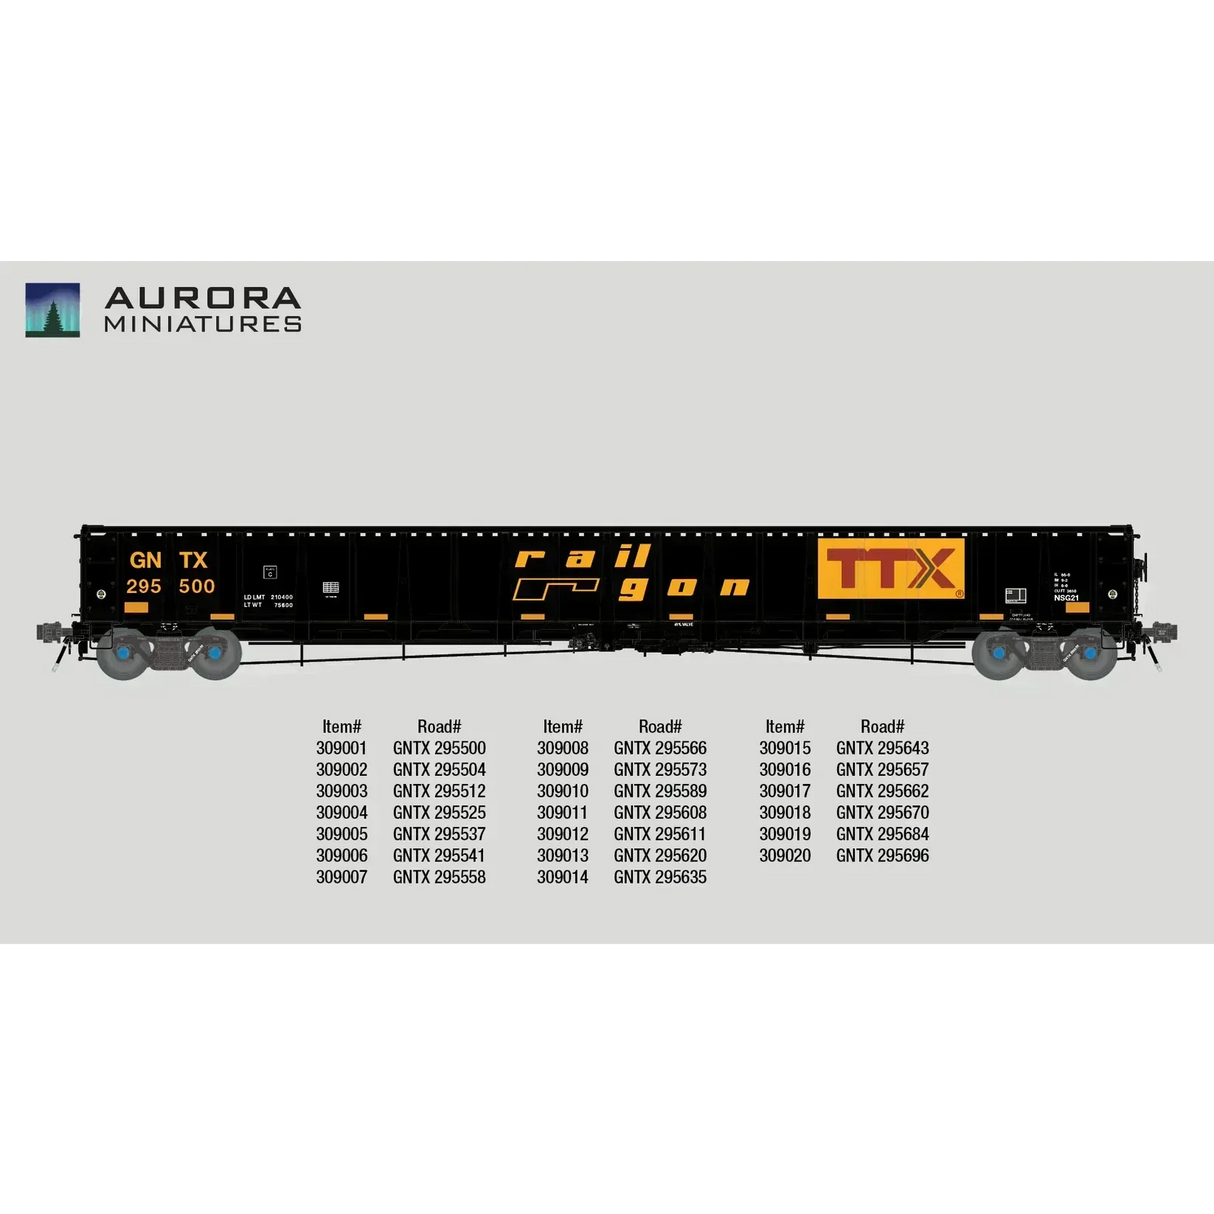 Aurora Miniatures HO Scale National Steel Car 3650 cf 66’ ‘Railgon’ Gondola 295608